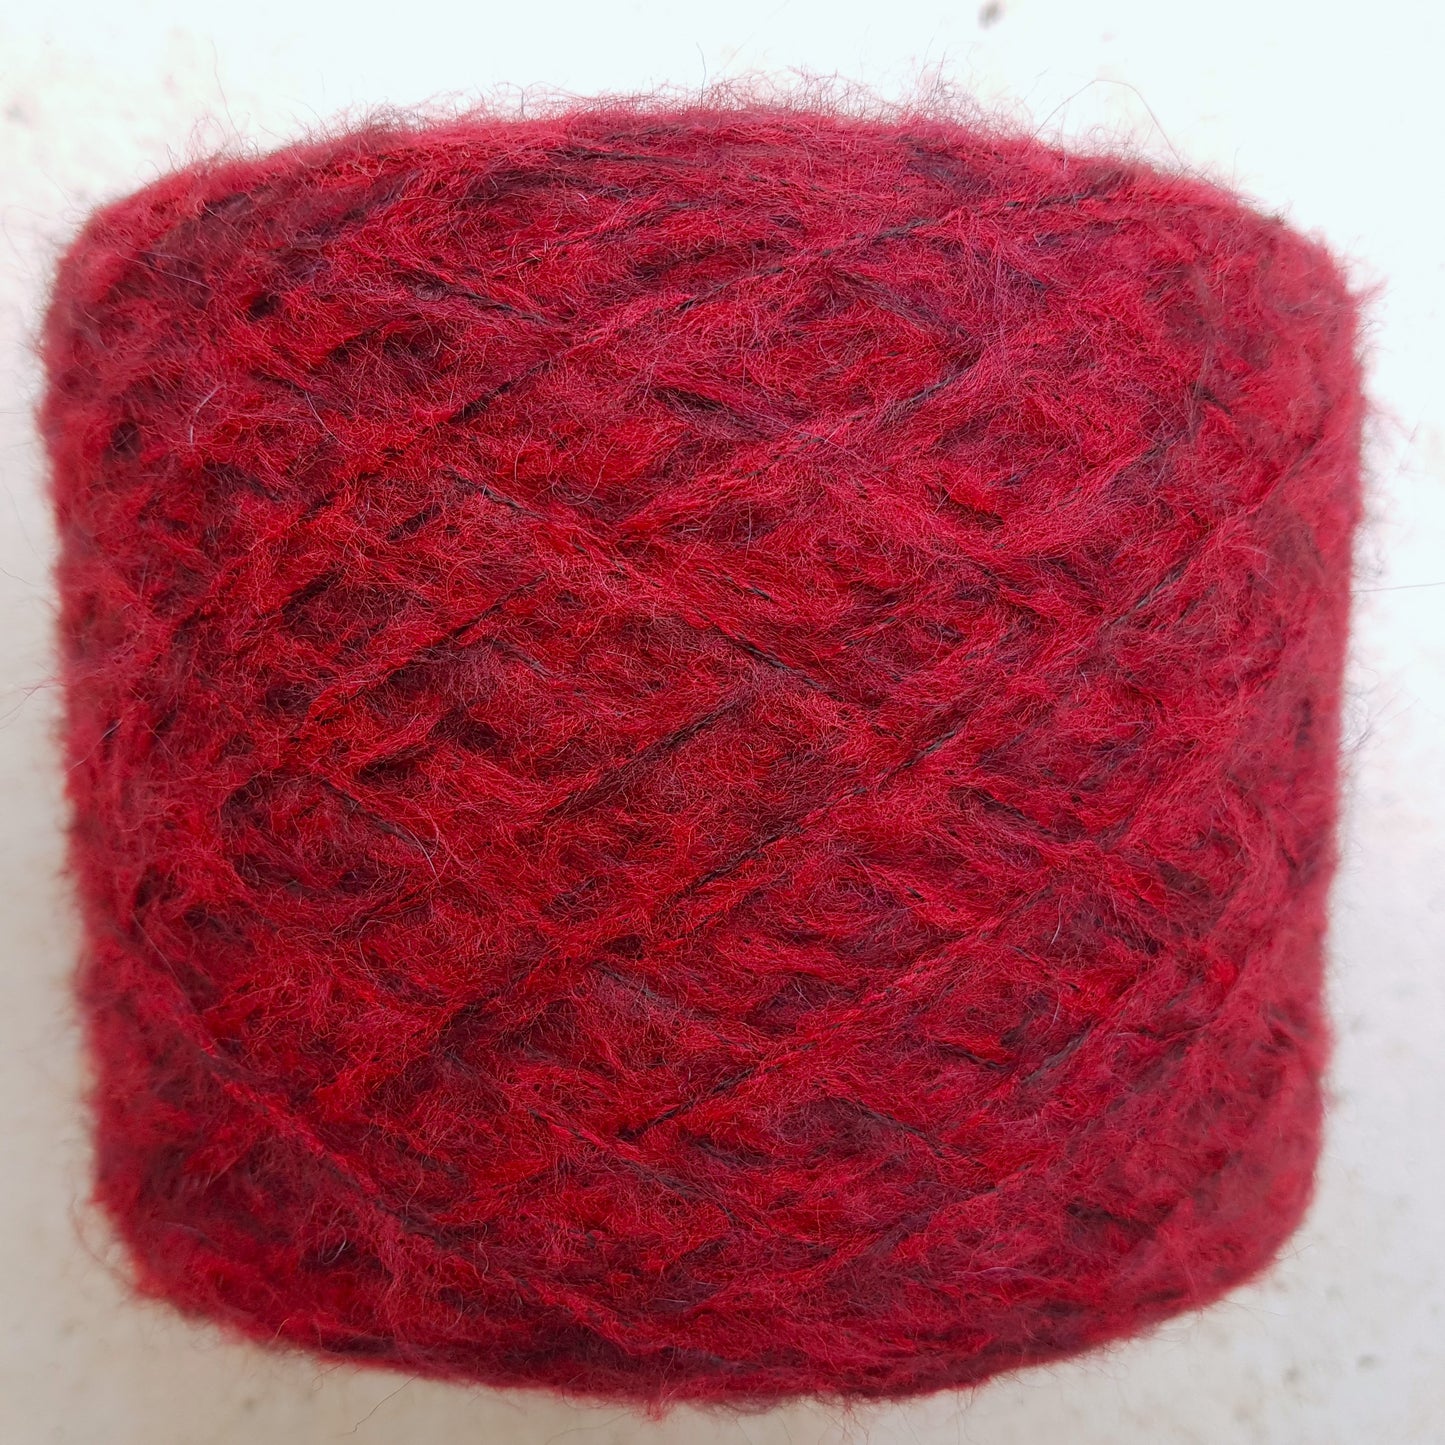 100g soft mohair Italian yarn Italian dark red color Mélange N.211